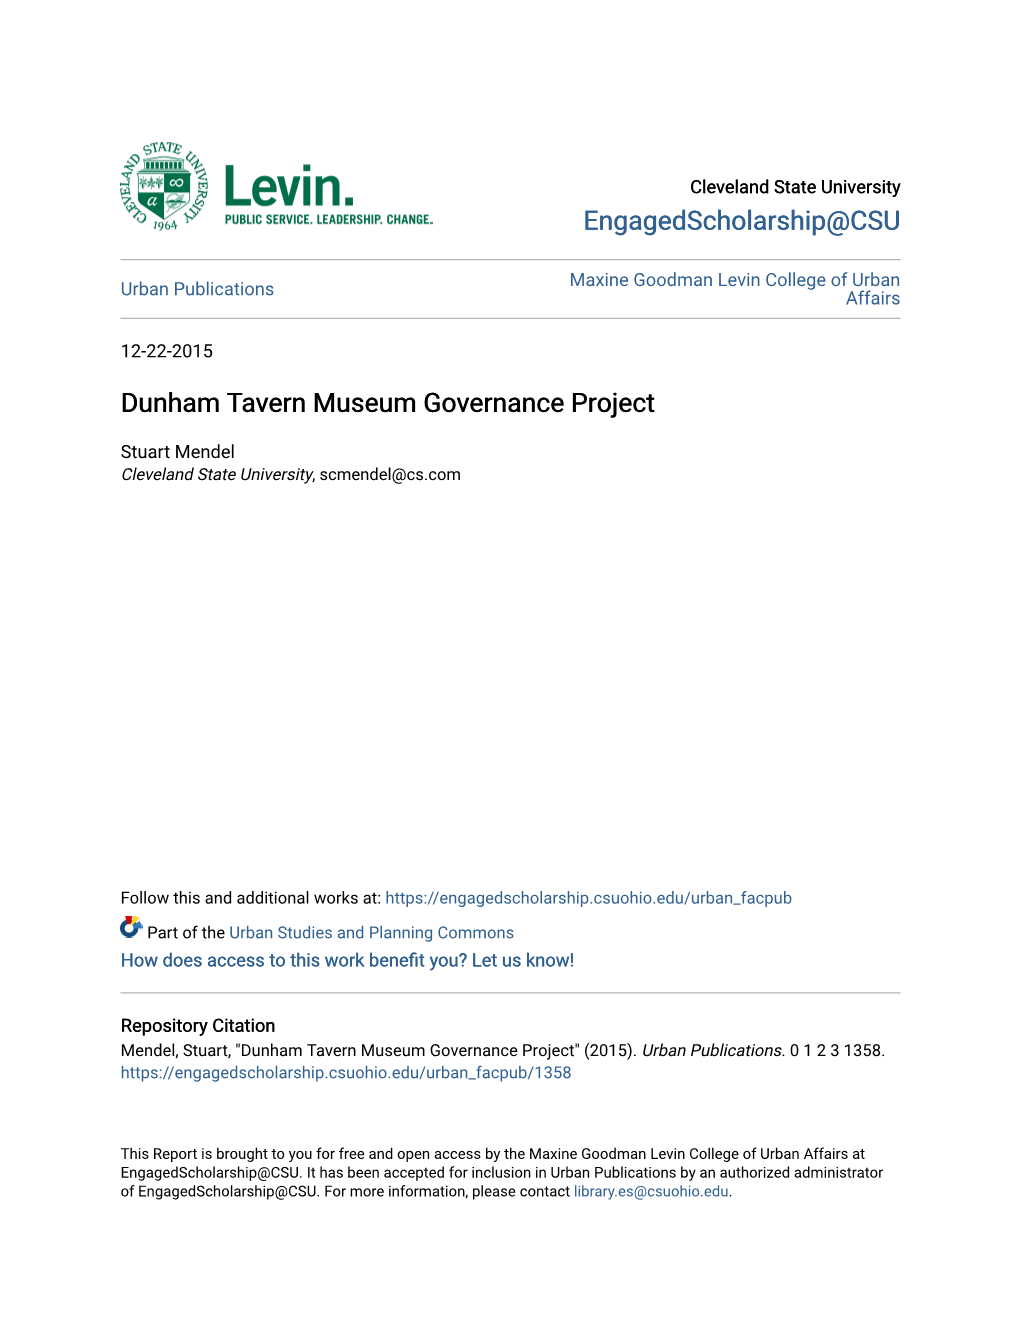 Dunham Tavern Museum Governance Project